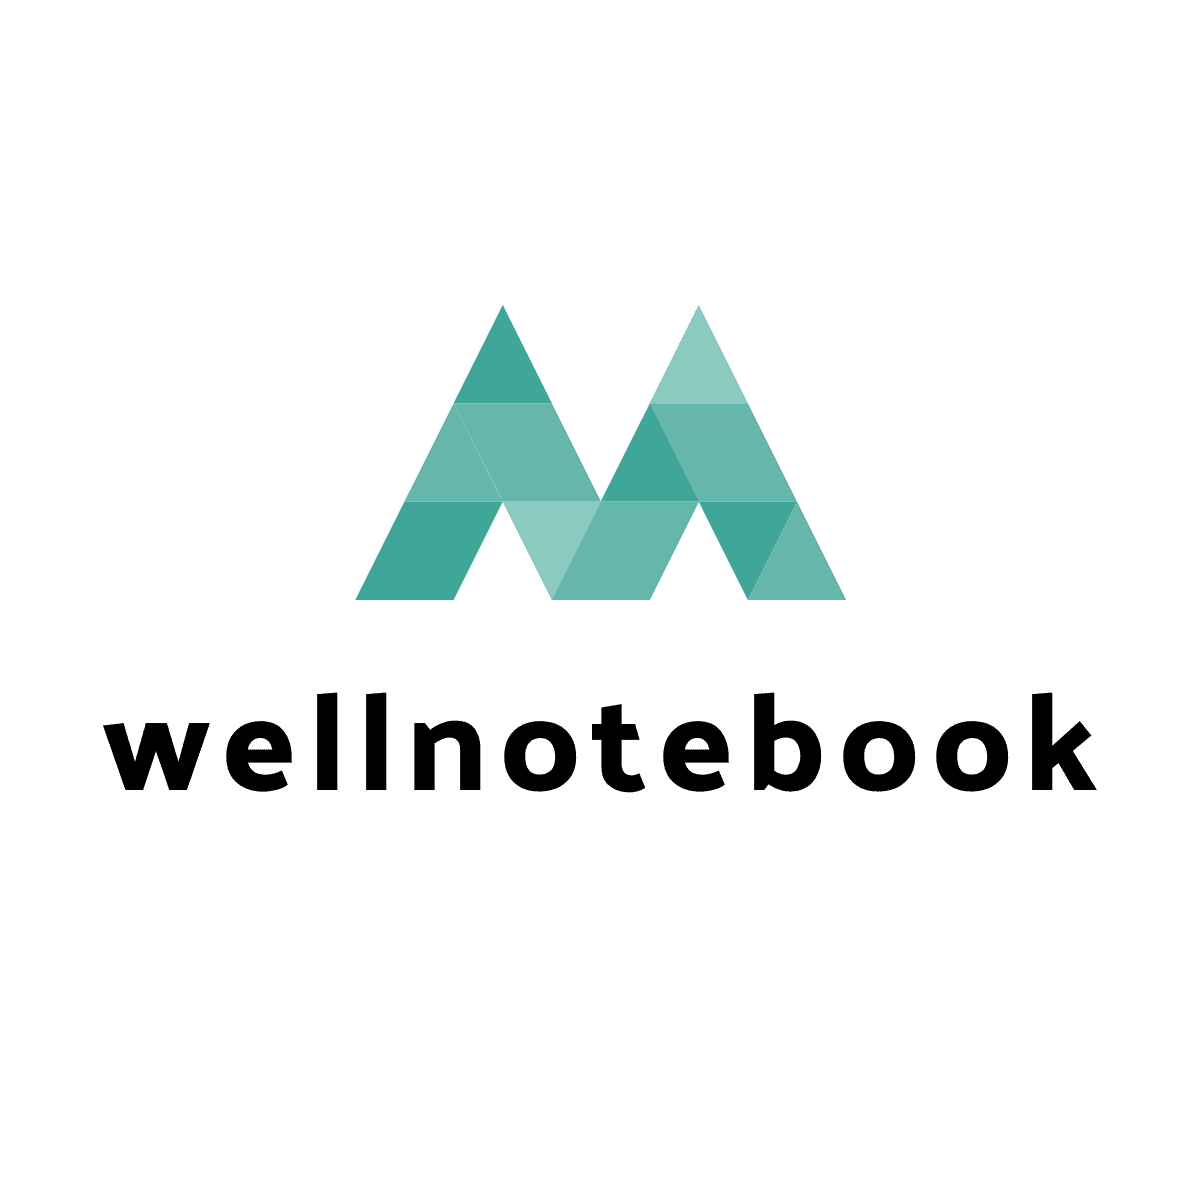 wellnotebook